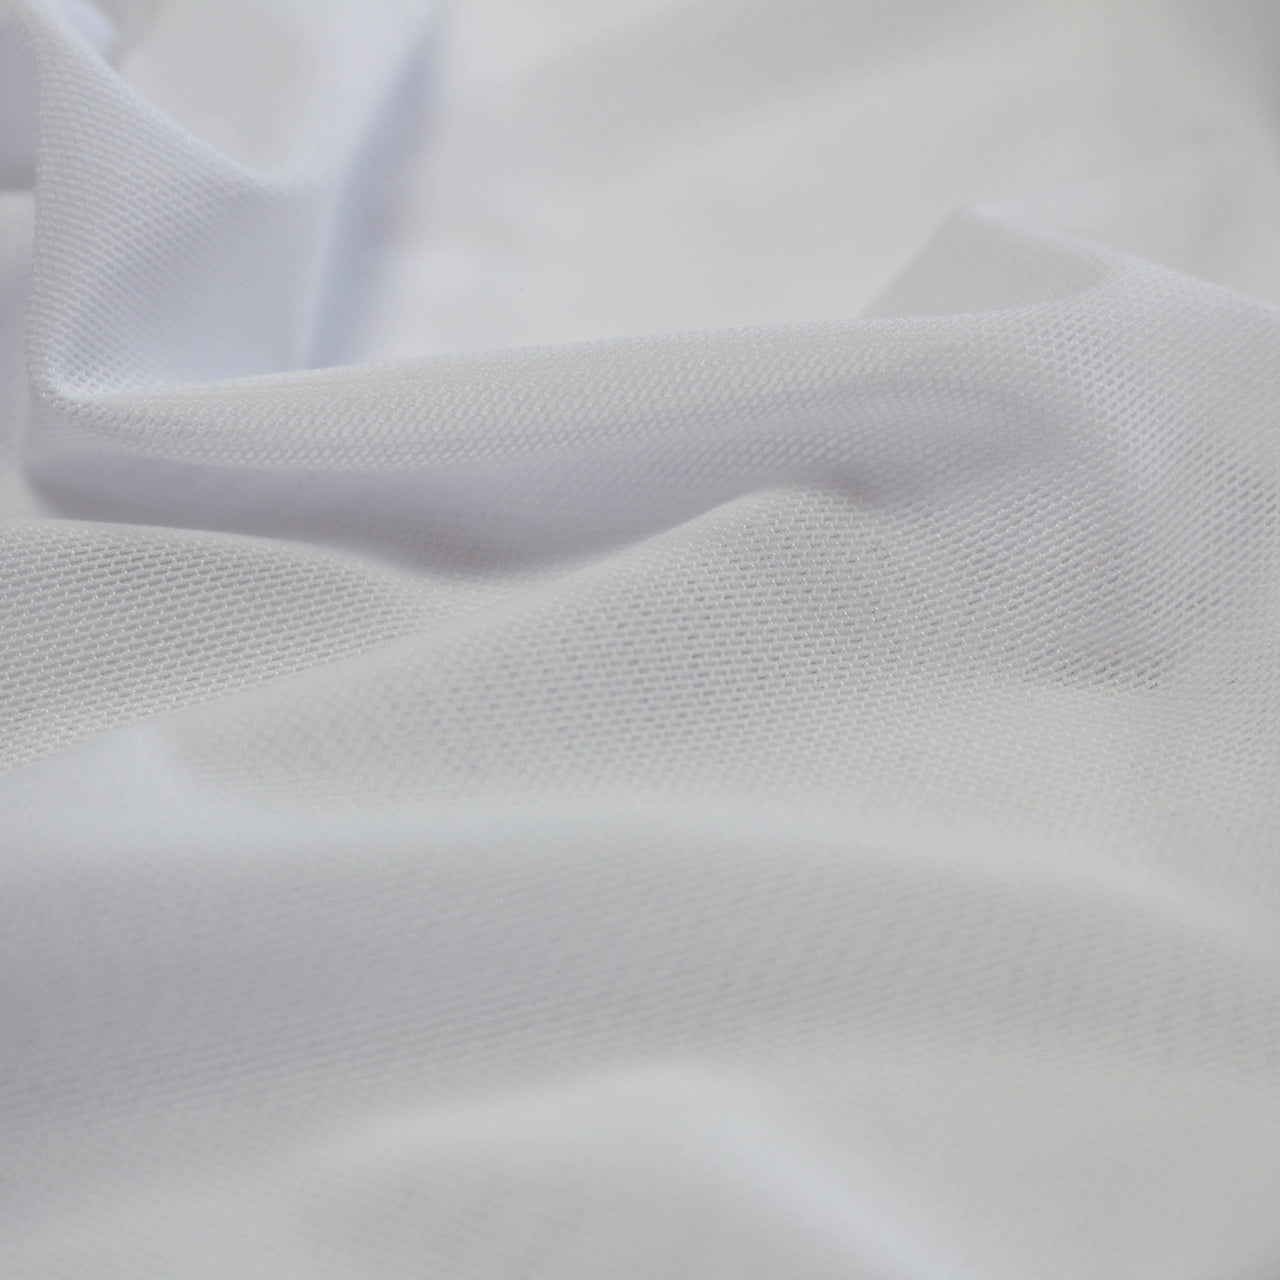 White - Power Mesh/Net Fabric (4 Way Stretch) Clothing Base